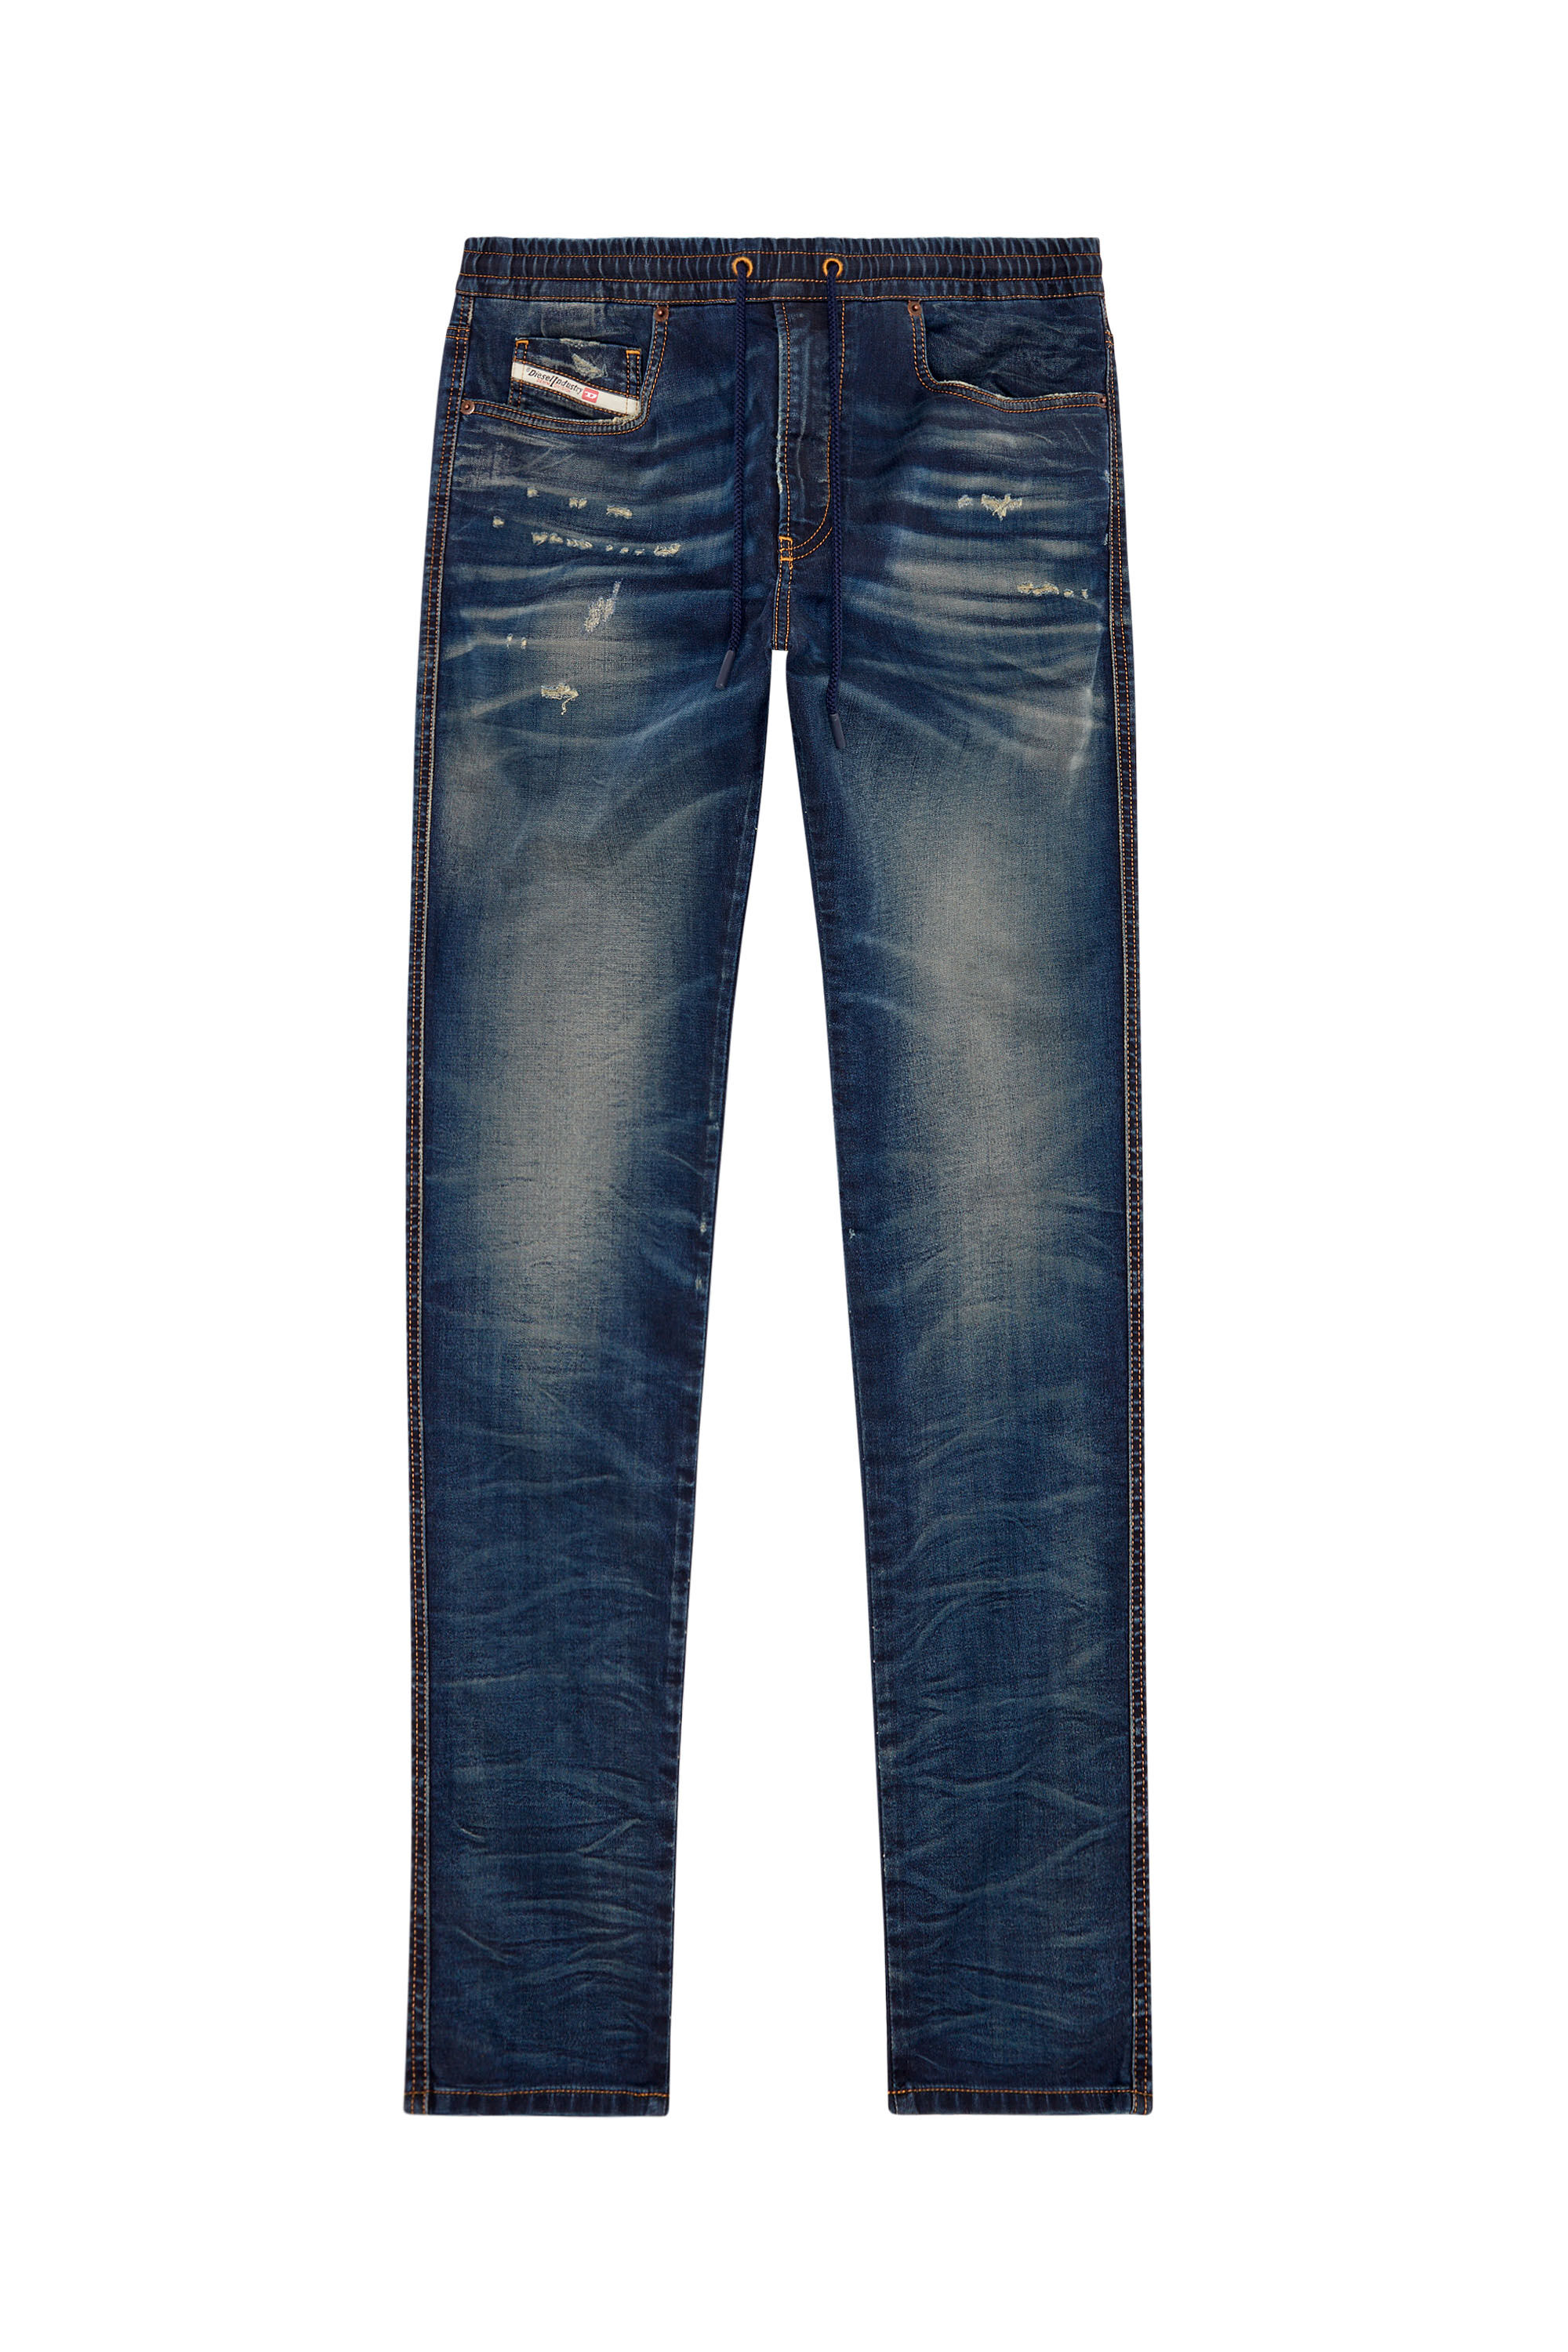 Men's Slim Jeans | Dark blue | Diesel 2060 D-Strukt Joggjeans®